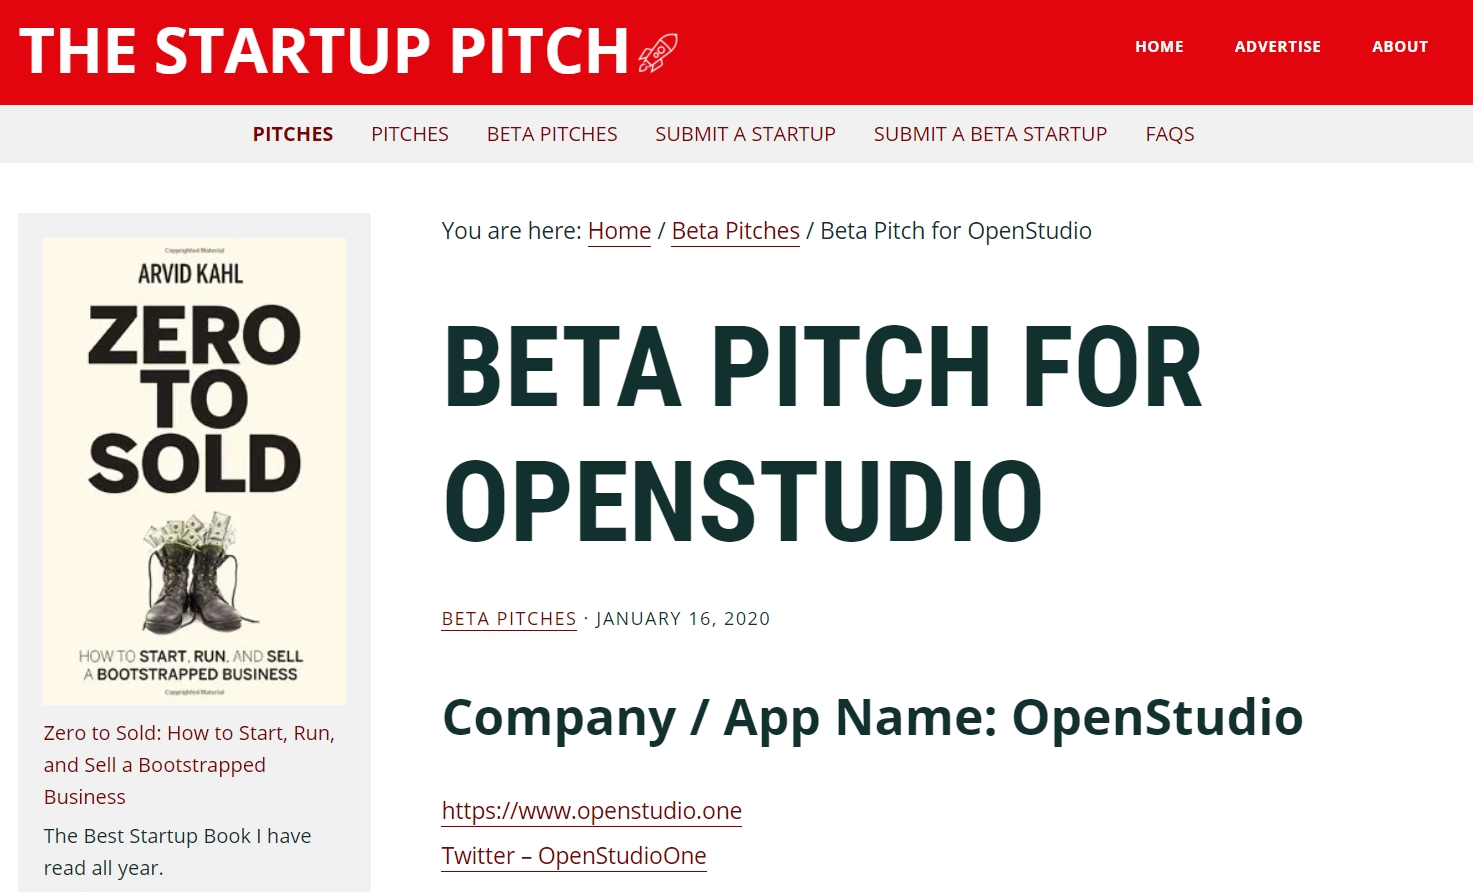 BetaPitch for Openstudio